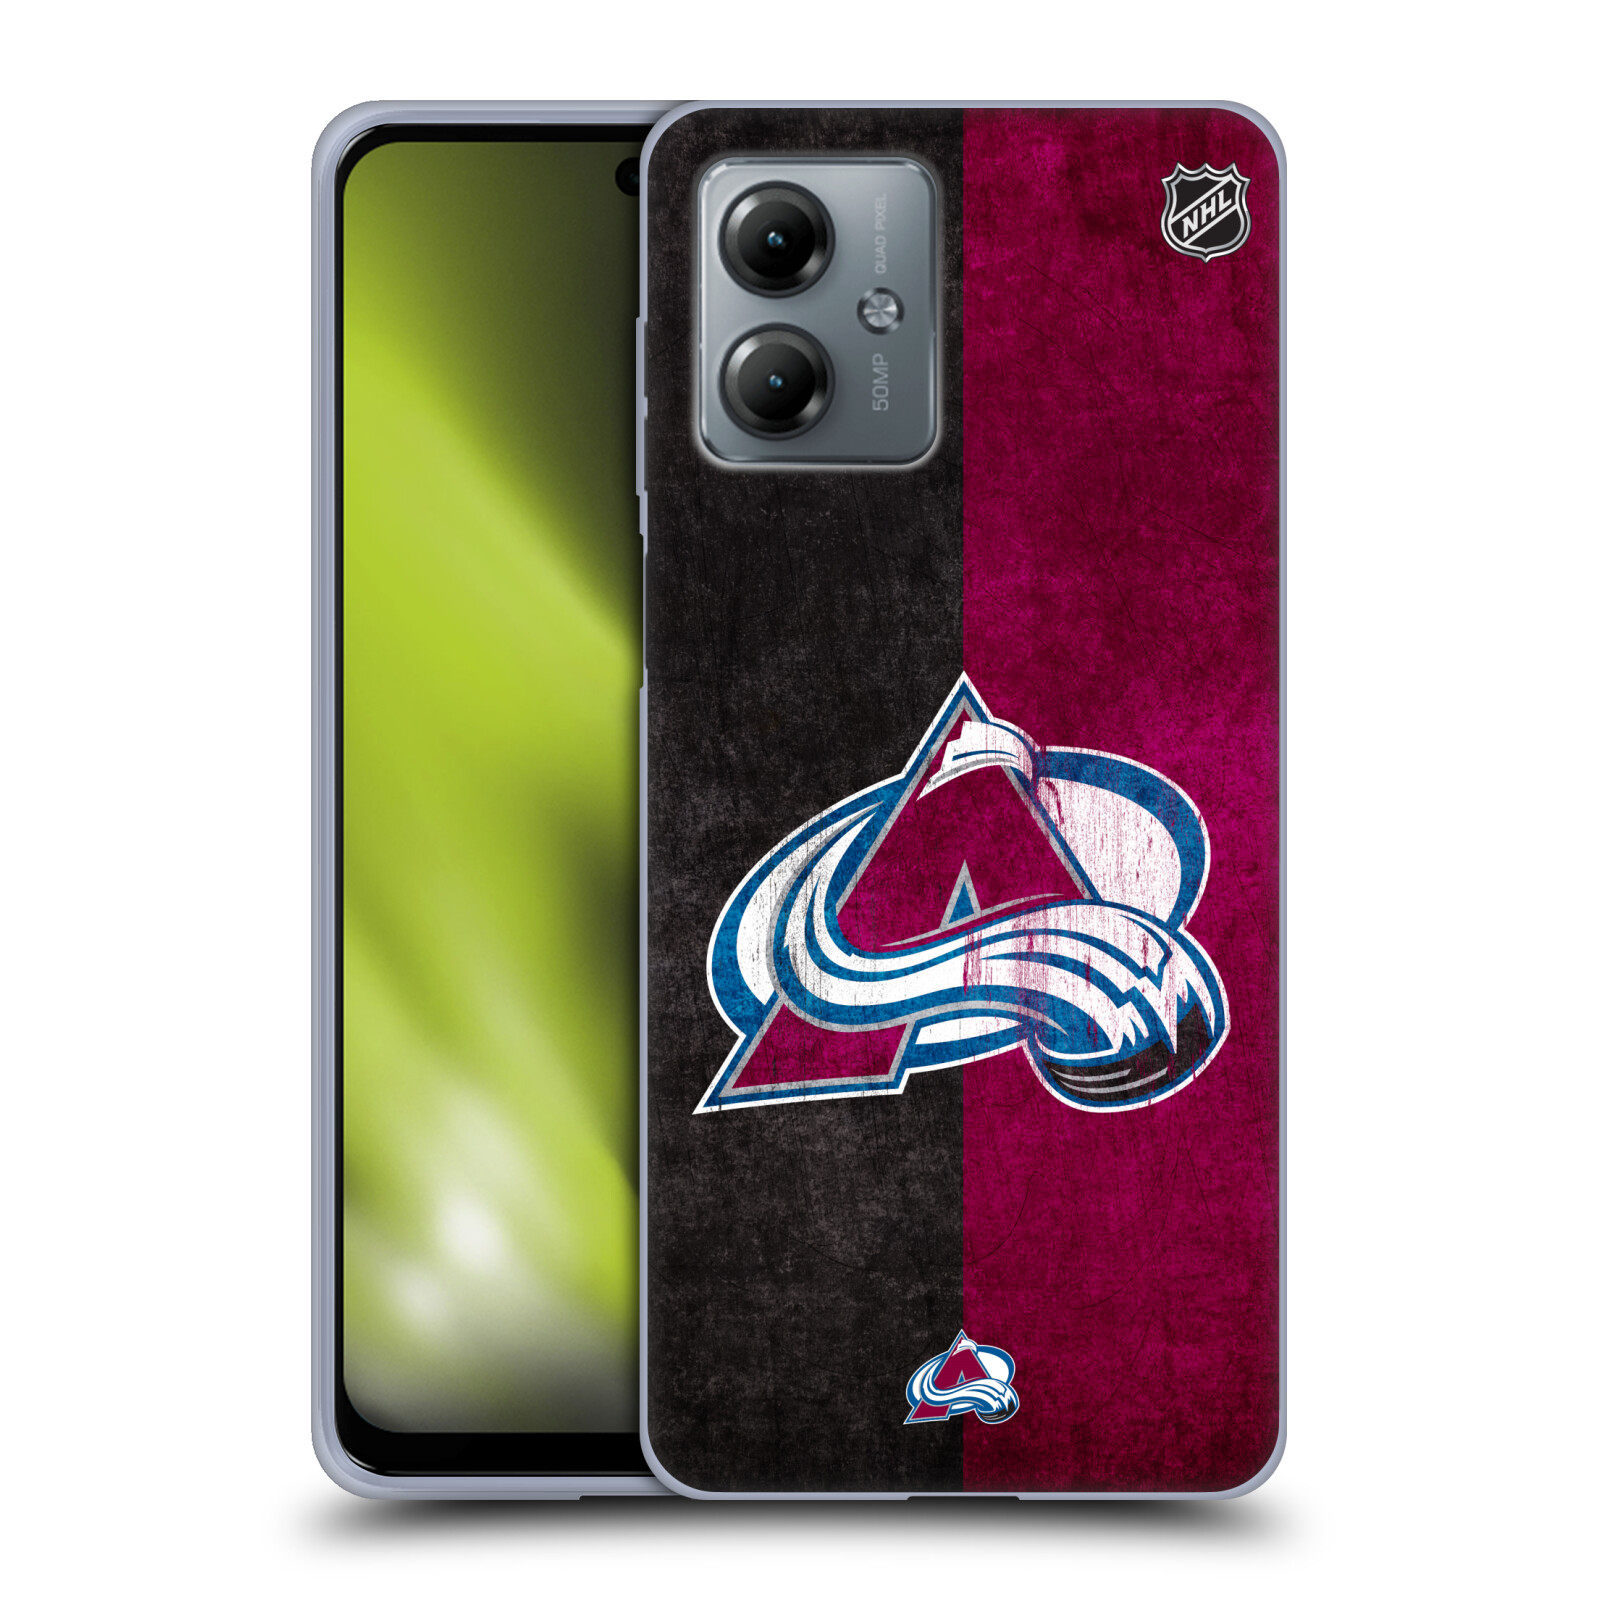 Silikonové pouzdro na mobil Motorola Moto G14 - NHL - Půlené logo Colorado Avalanche (Silikonový kryt, obal, pouzdro na mobilní telefon Motorola Moto G14 s licencovaným motivem NHL - Půlené logo Colorado Avalanche)